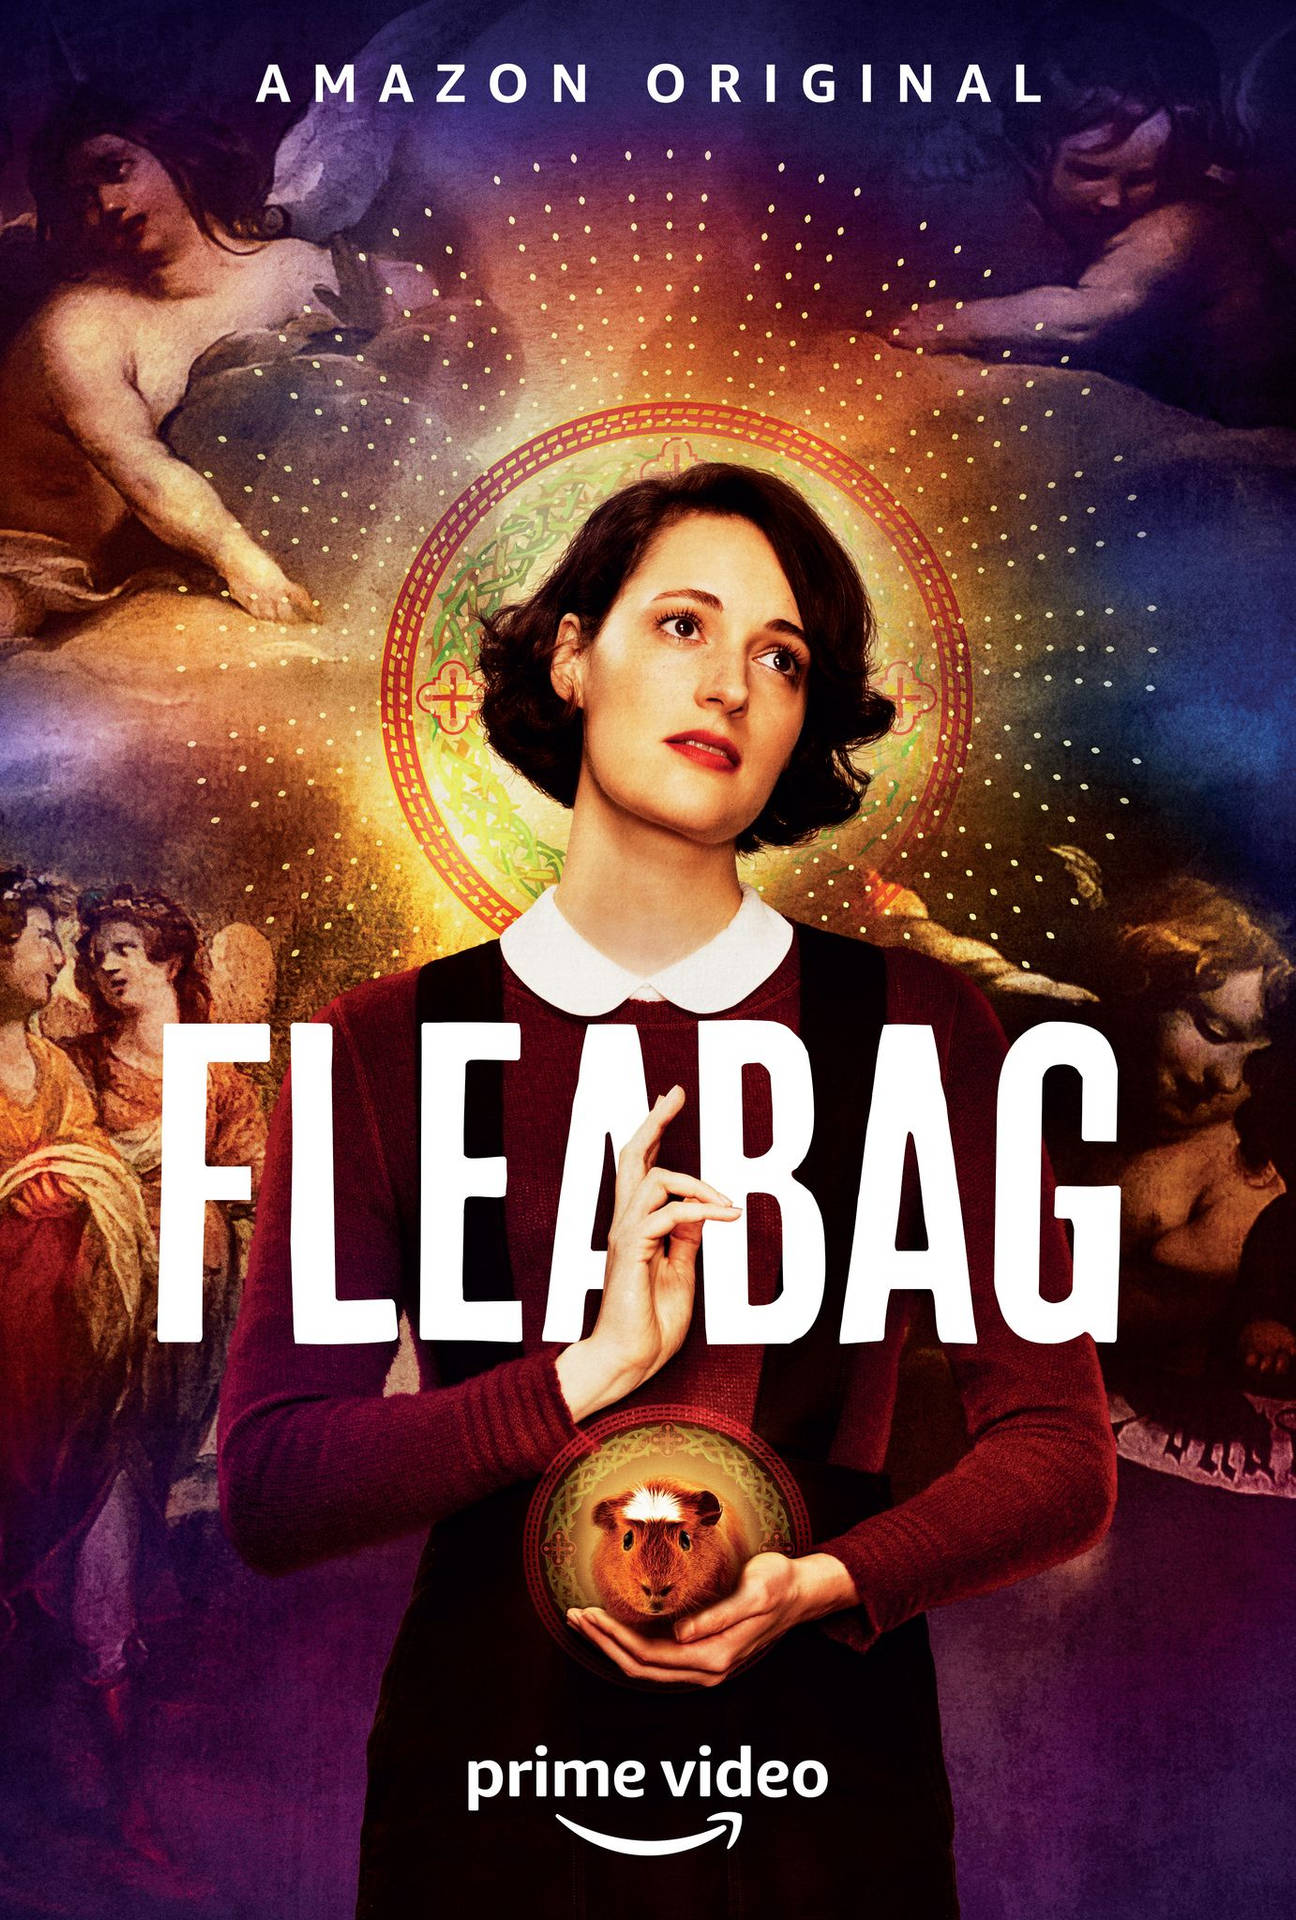 Fleabag Official Poster